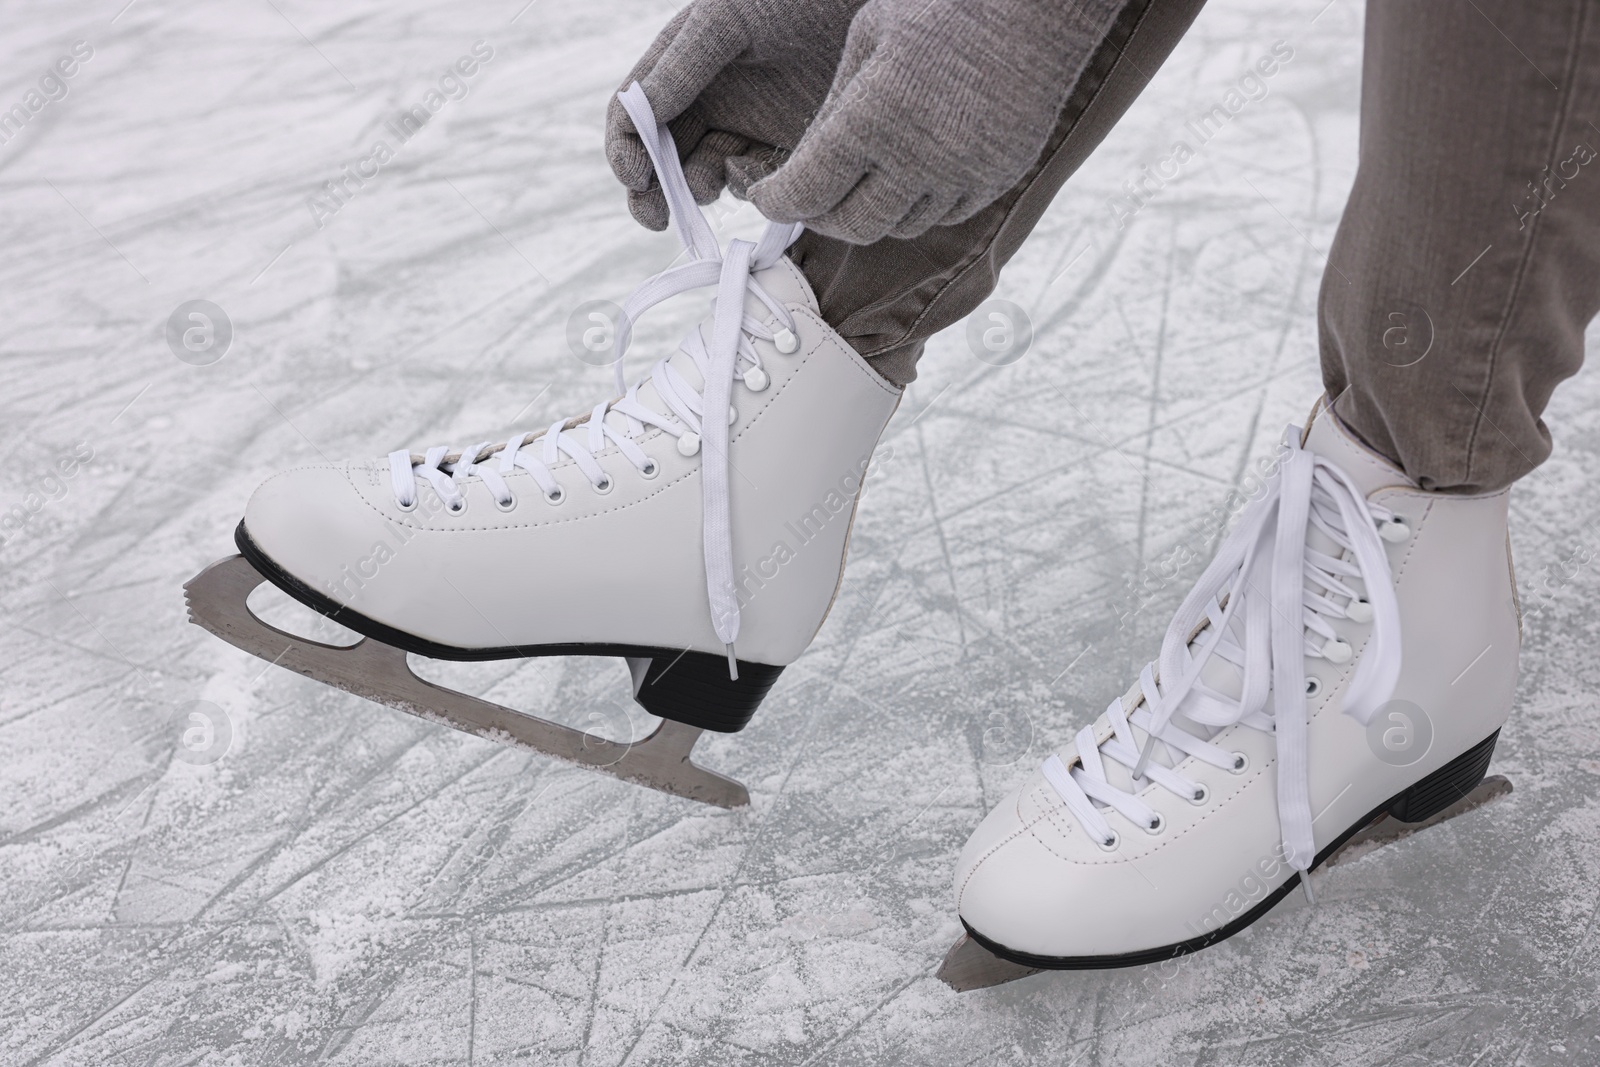 Photo of Woman lacing figure skates on ice, closeup